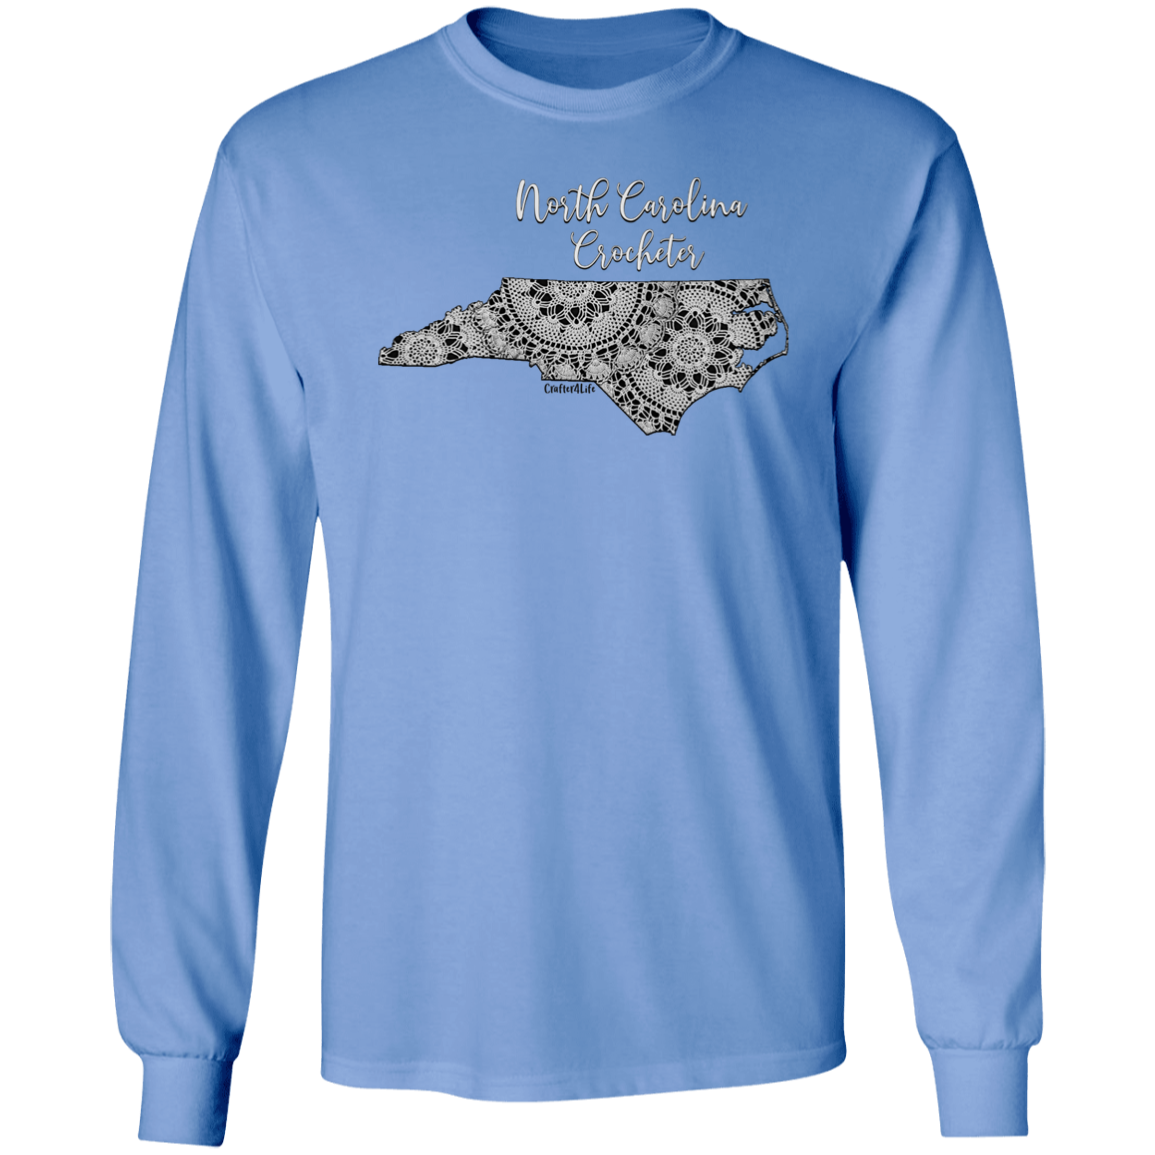 North Carolina Crocheter LS Ultra Cotton T-Shirt